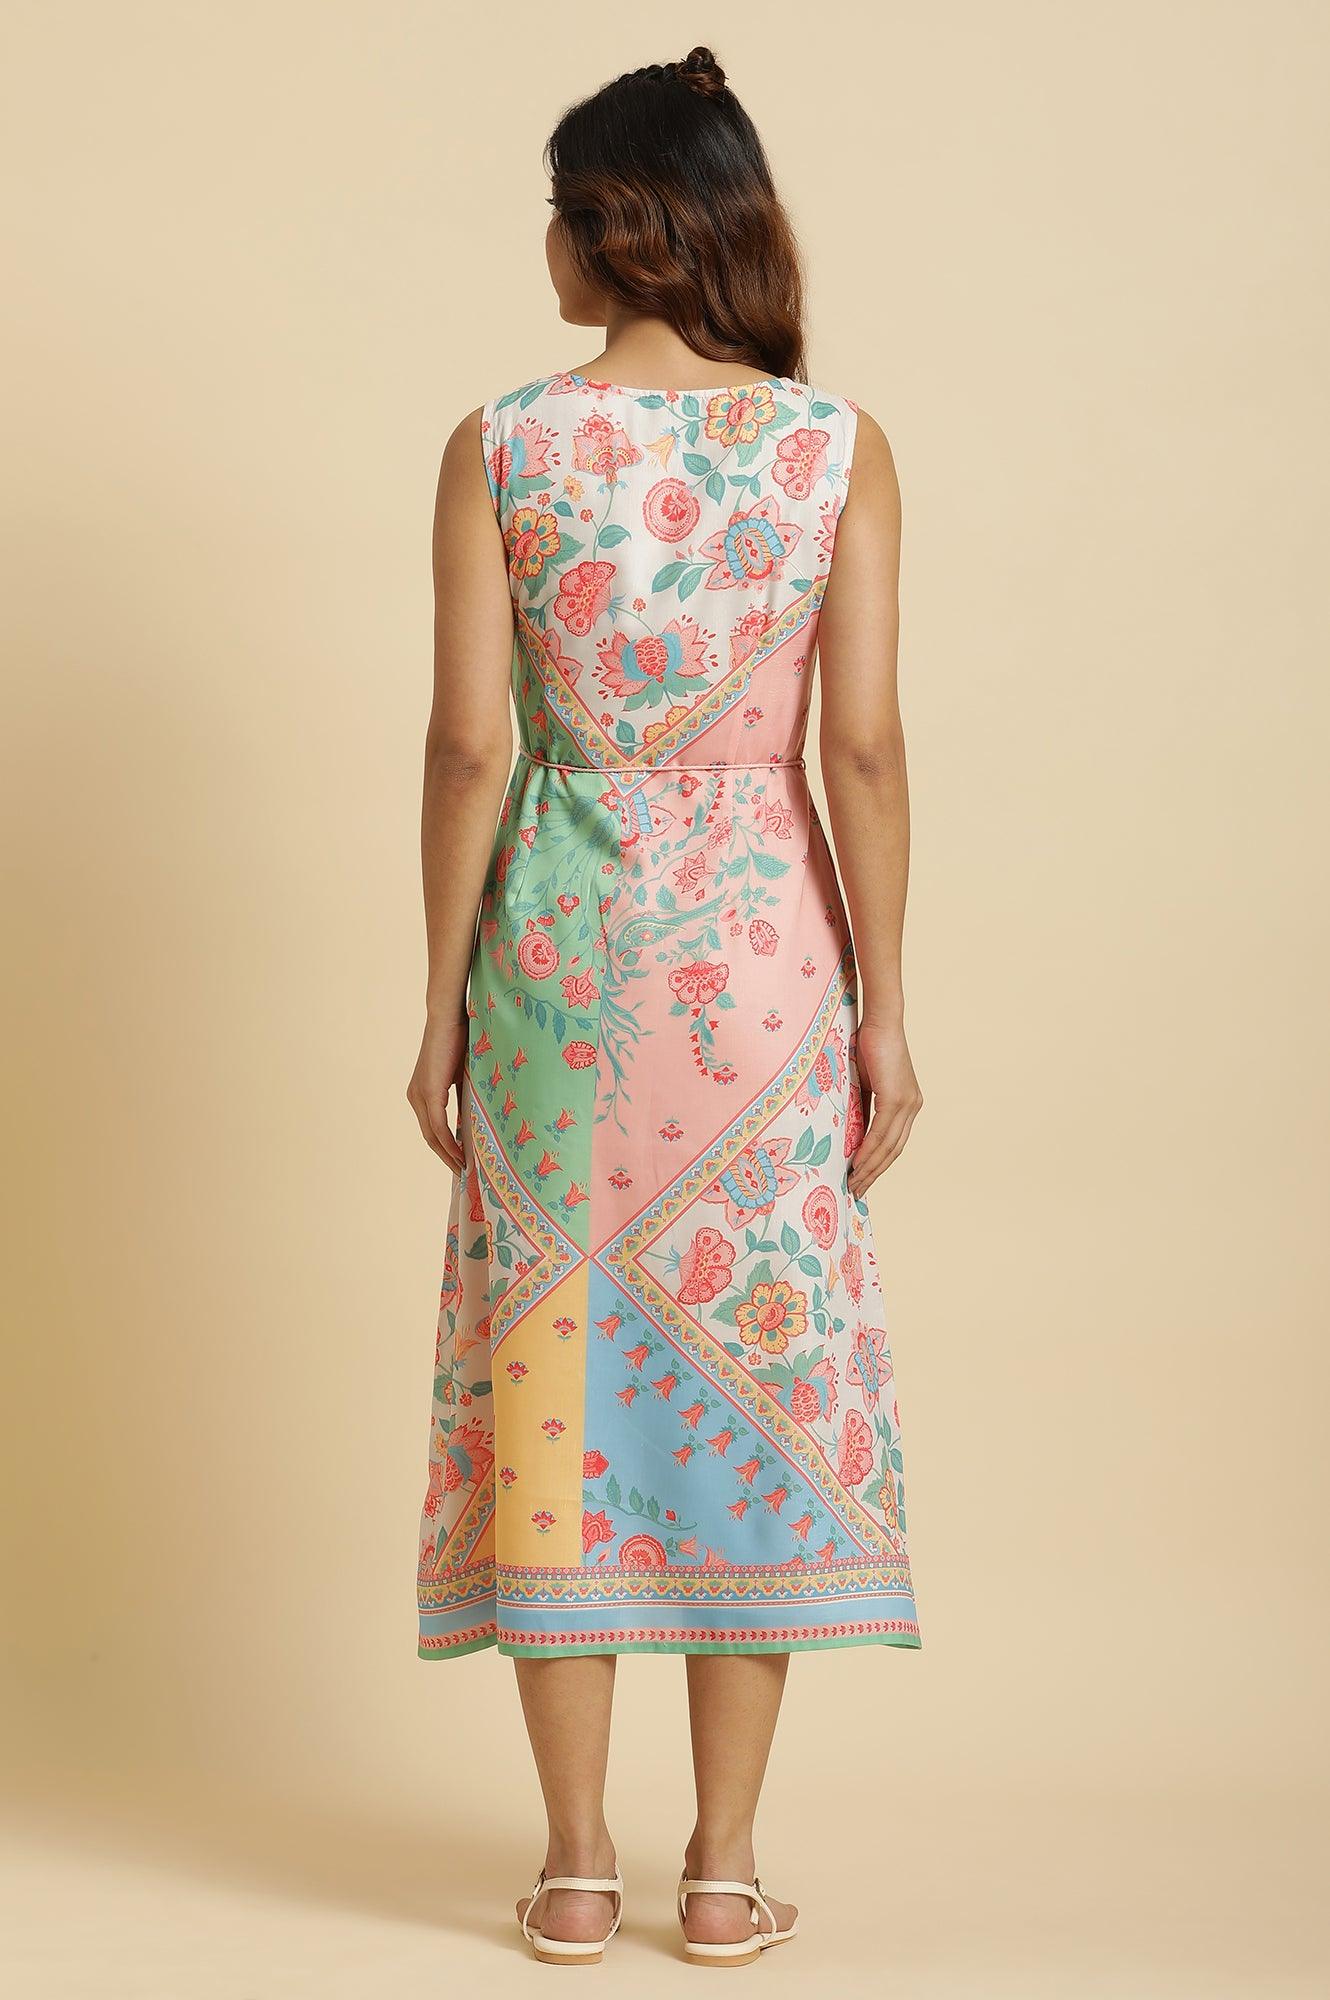 Multi-Coloured Floral Printed Sleeveless Dress - wforwoman